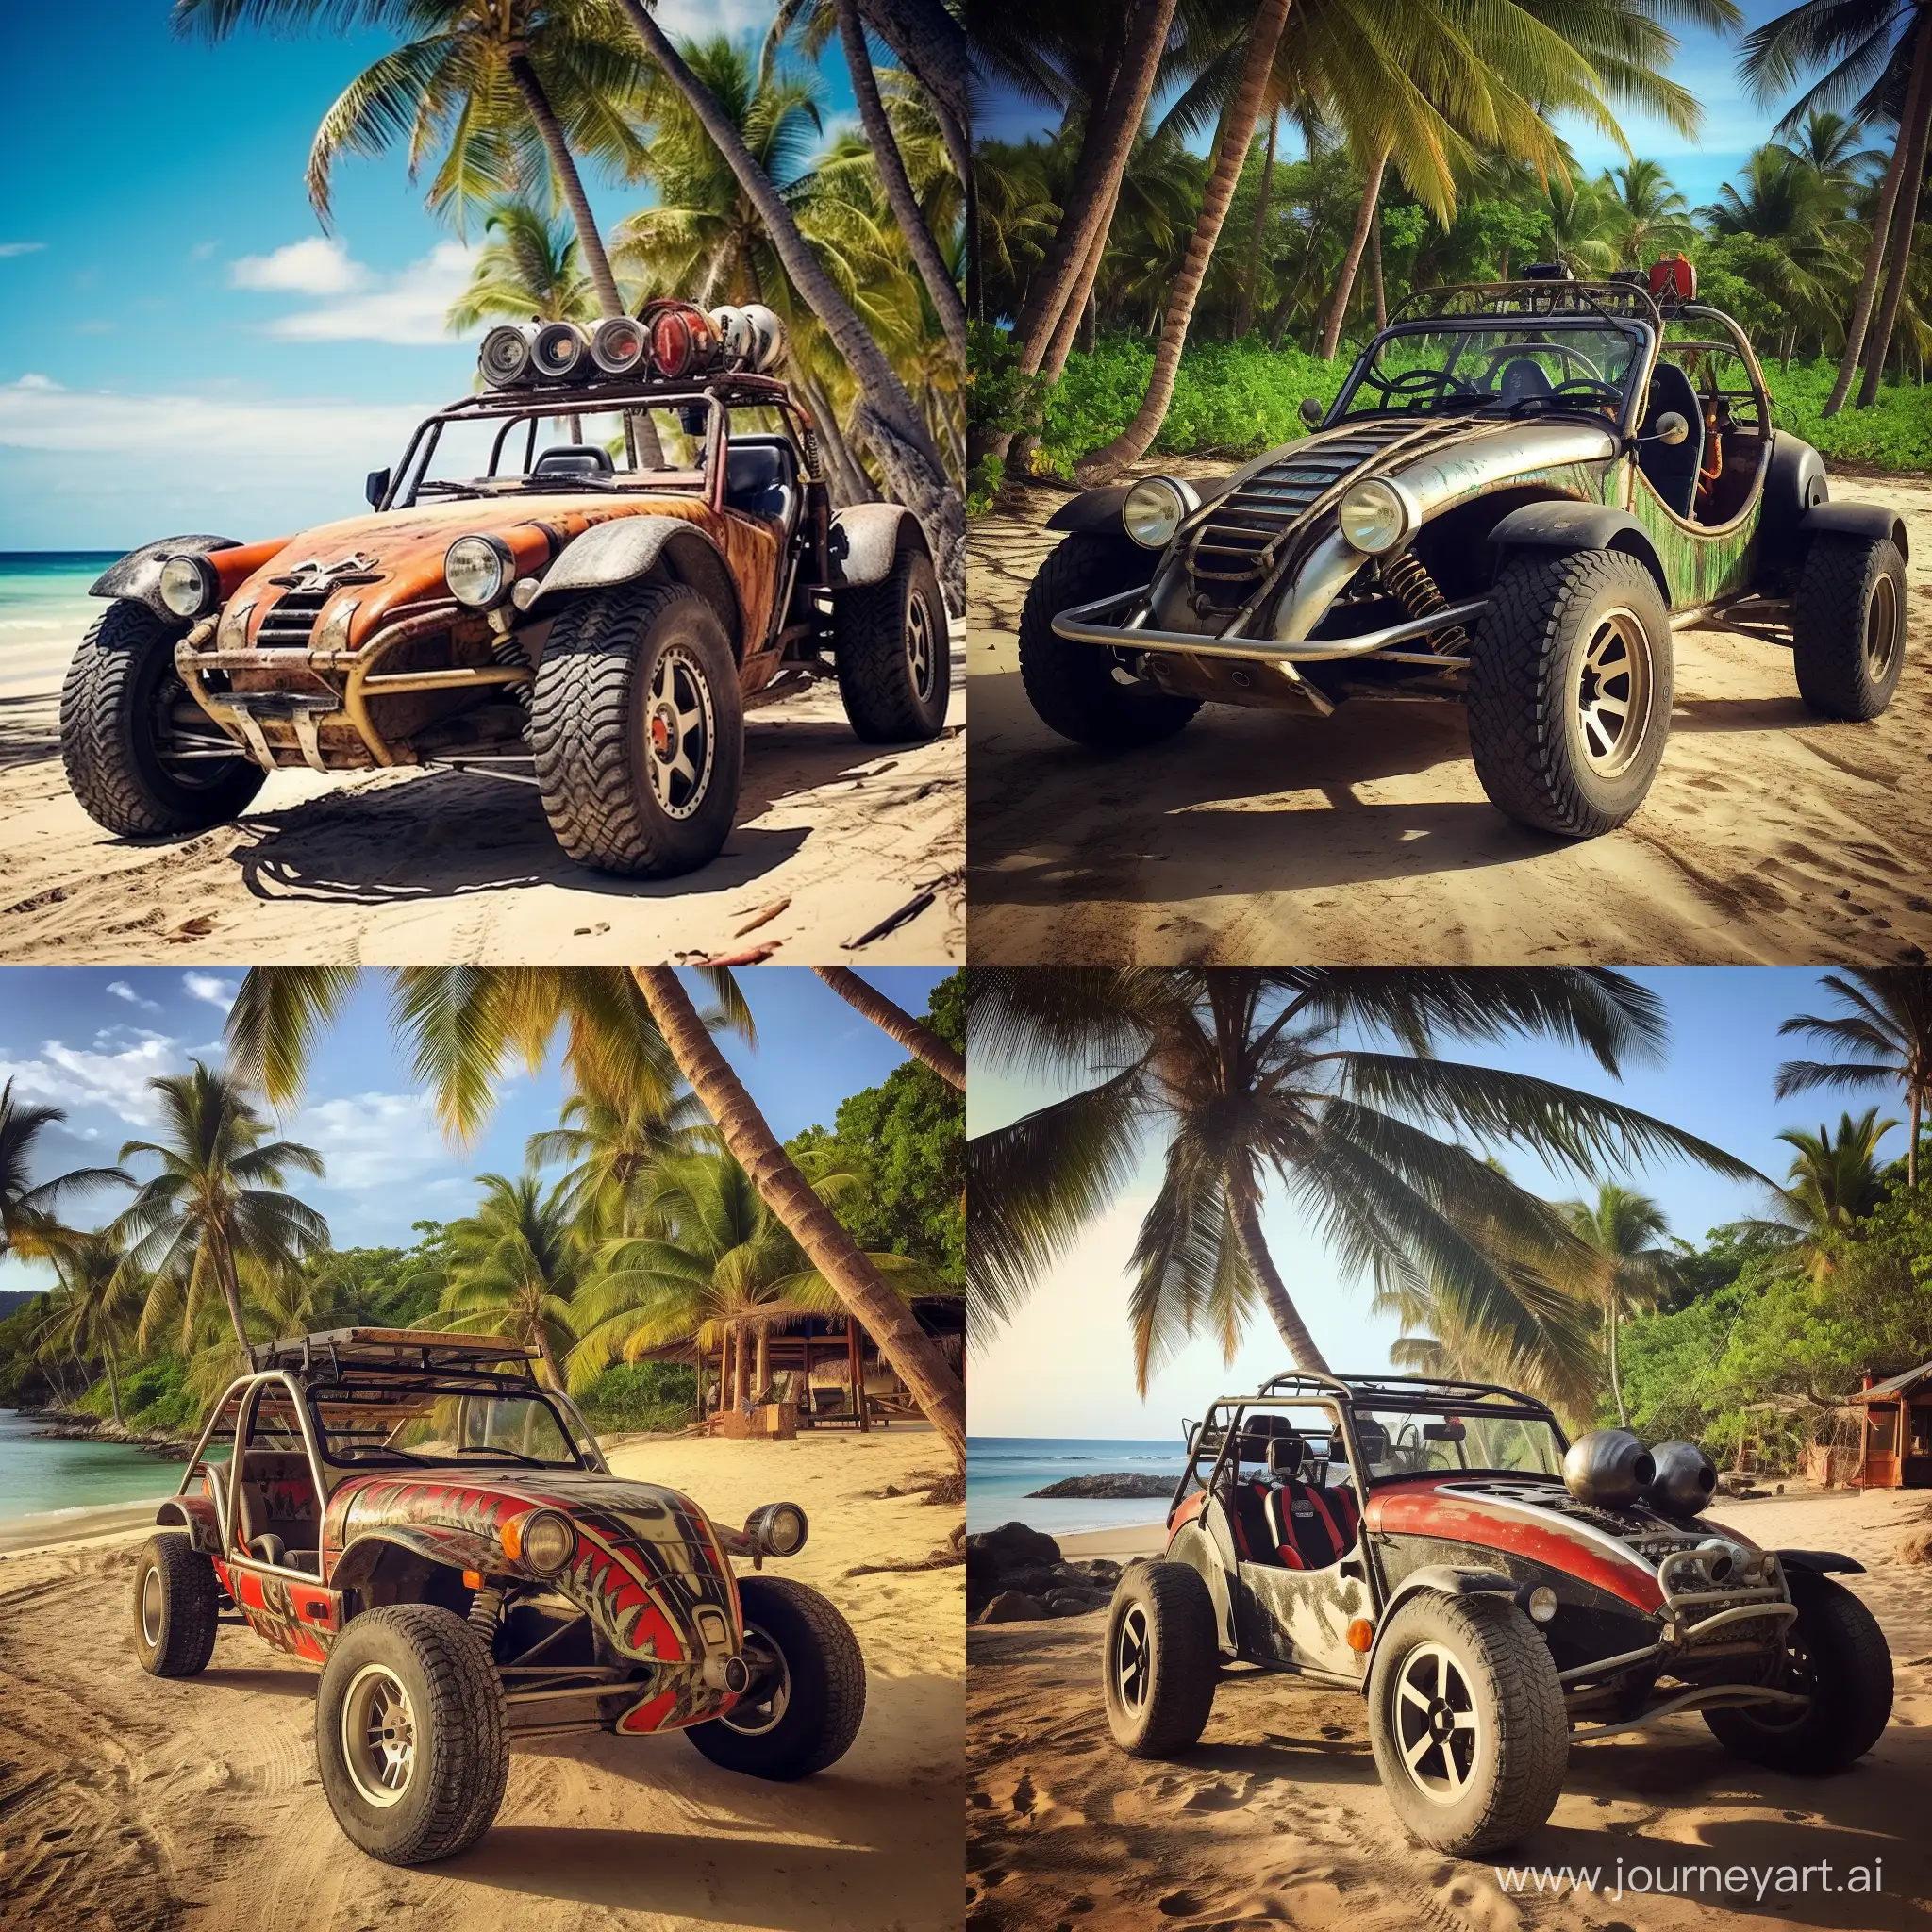 Classic-Meyers-Manx-Dune-Buggy-Exploring-the-Caribbean